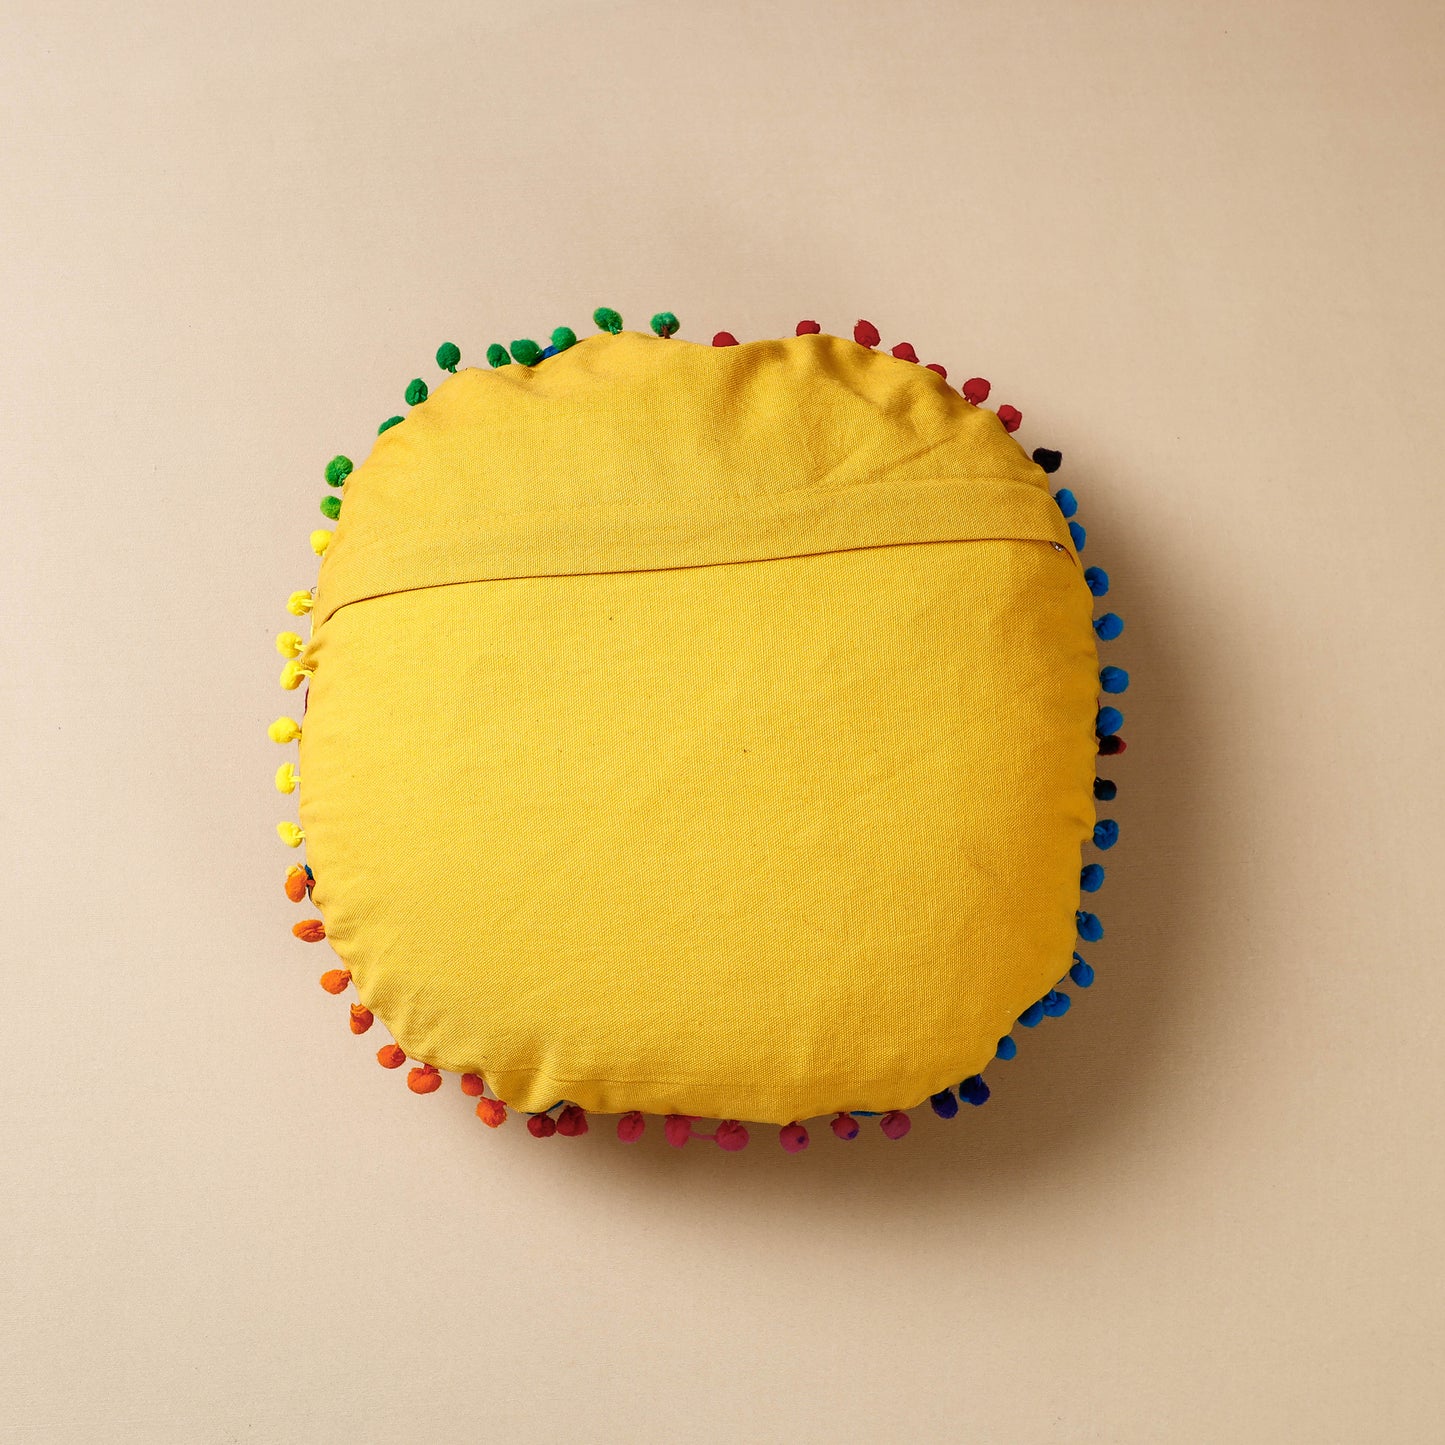 Suzani Embroidery Cushion Cover